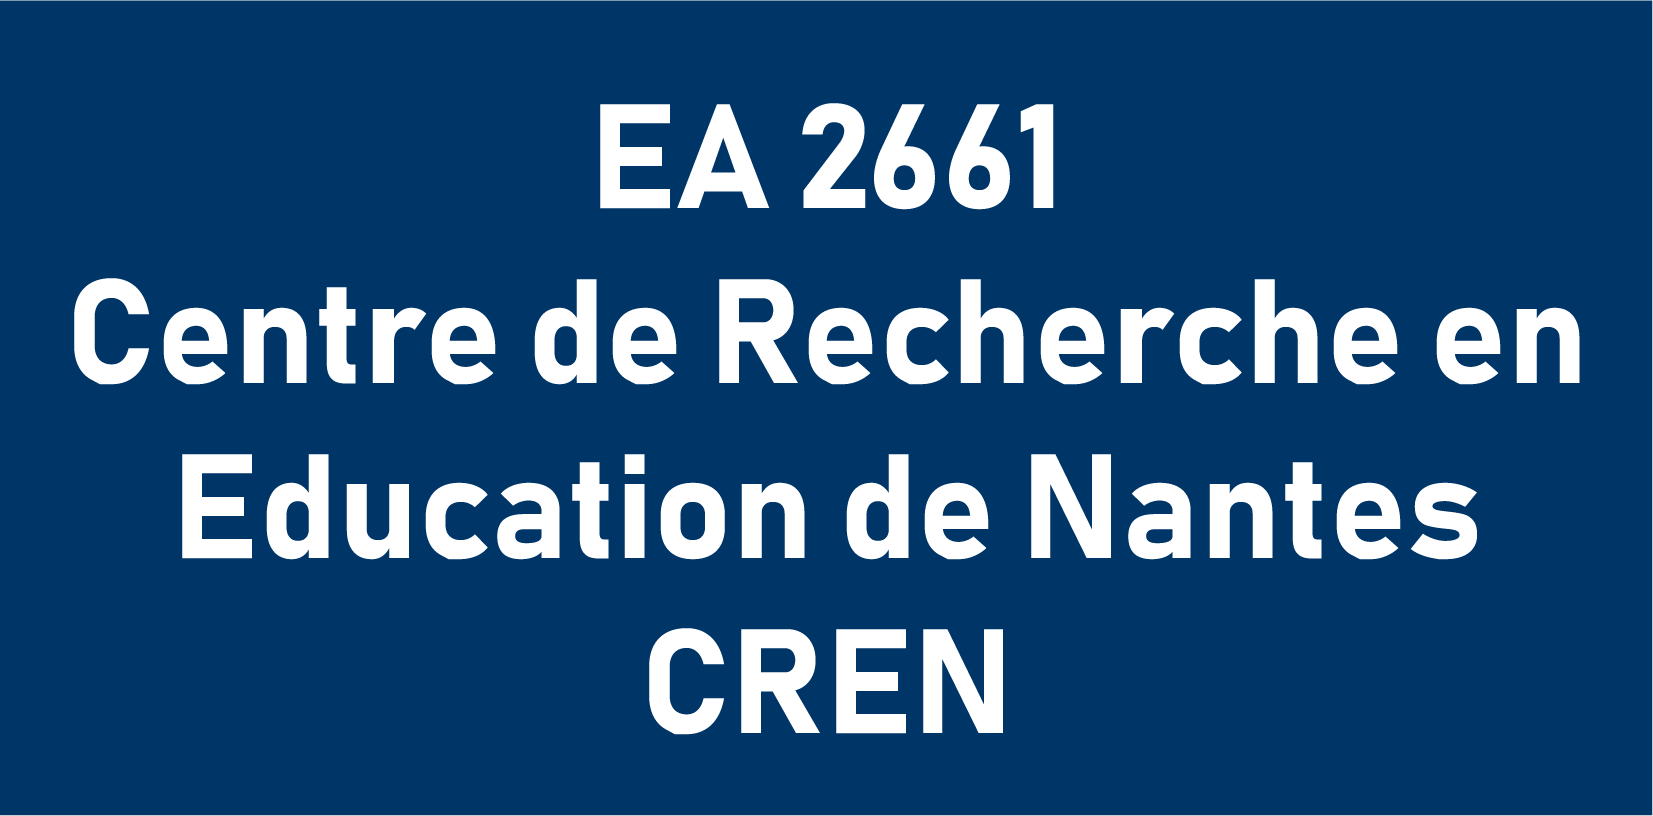 EA 2661 Centre de Recherche en Education de Nantes